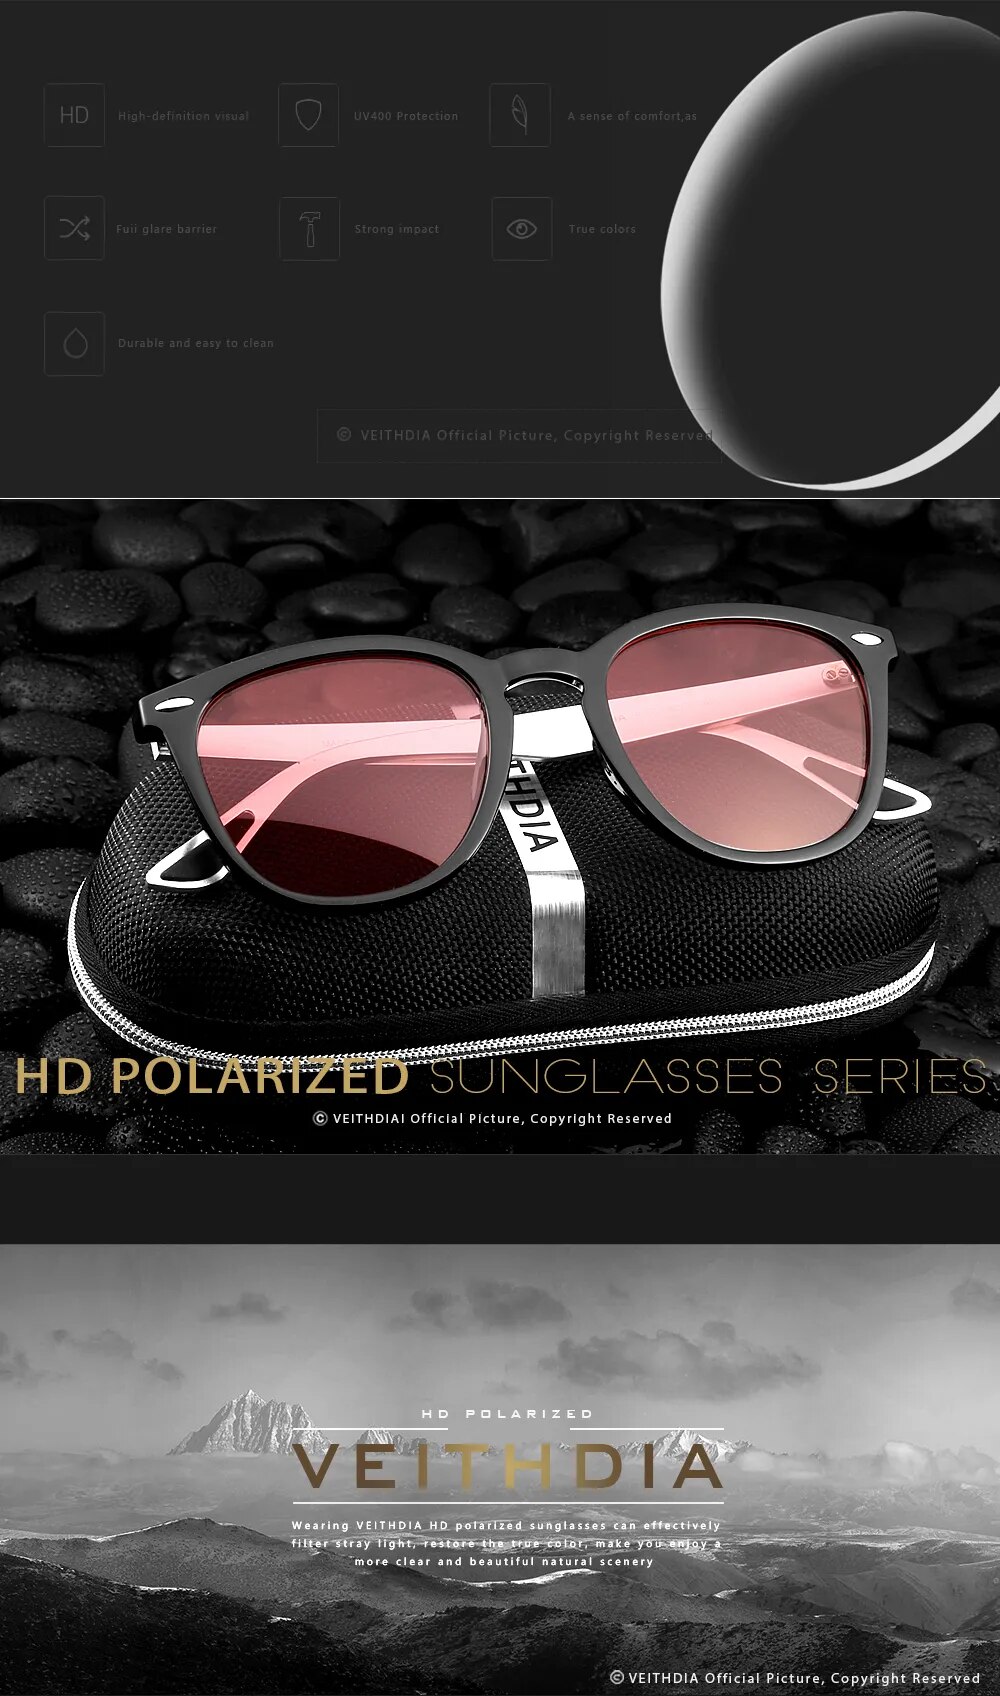 VEITHDIA-gafas de sol Unisex, lentes de aluminio + TR90, espejo fotocromático, accesorios de moda, 6116